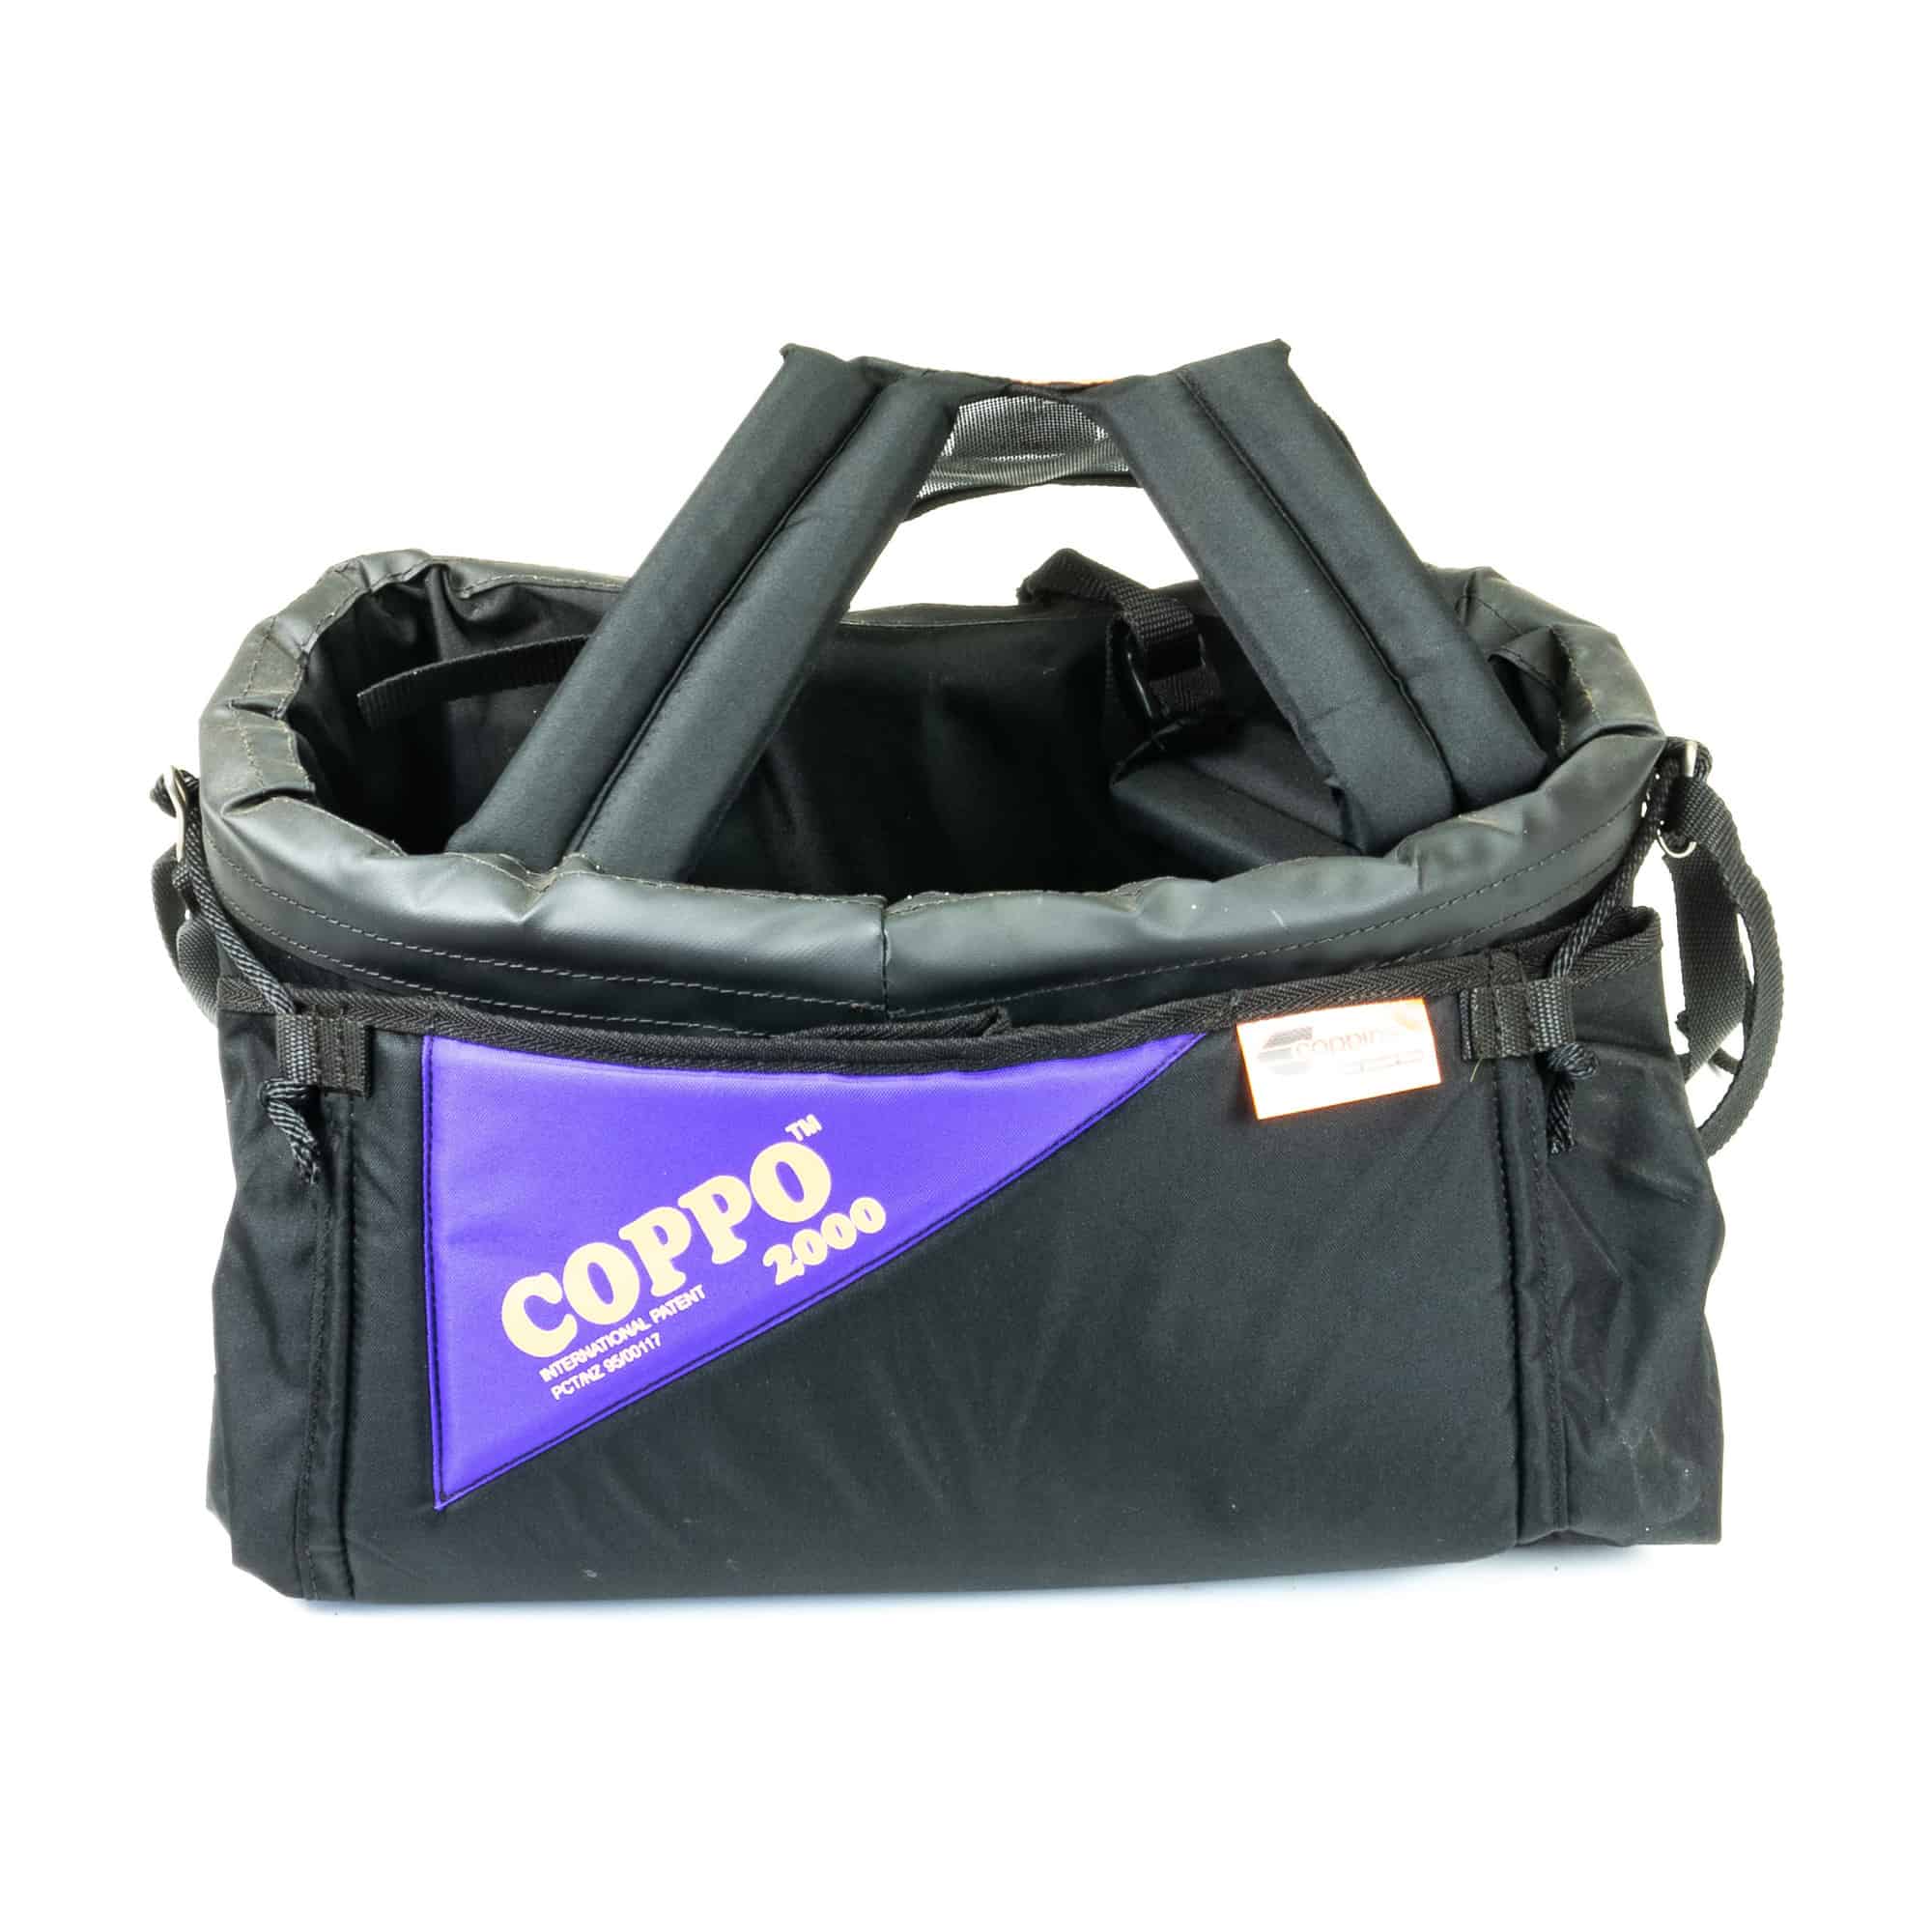 Coppo Premium Pickers Bag  0.8-1.2 Bushel - ActiveVista for